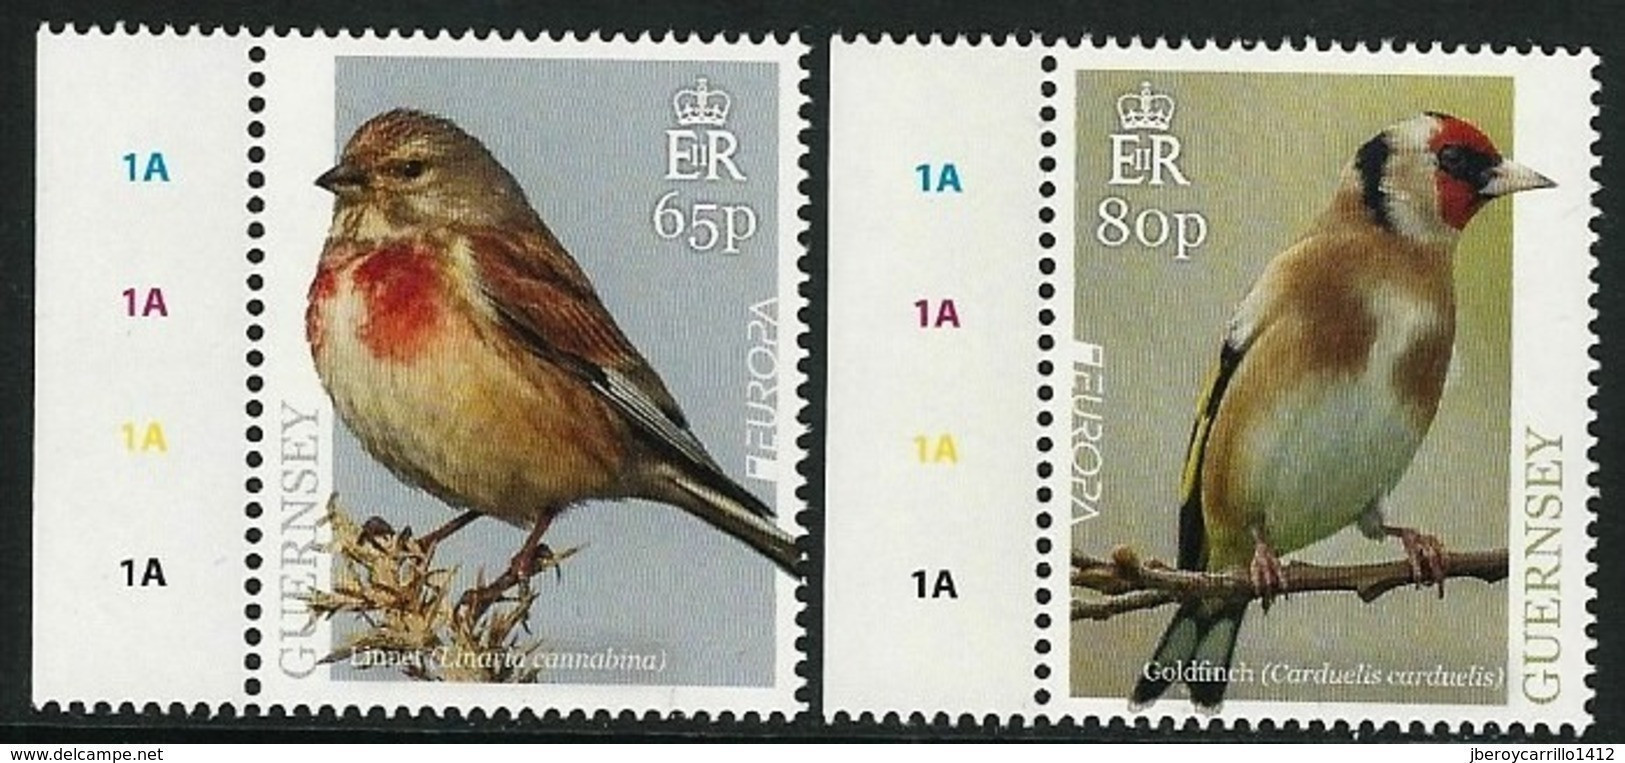 GUERNSEY - EUROPA 2019 - NATIONAL BIRDS & SYMBOLISH.- "AVES - BIRDS - VÖGEL - OISEAUX"- SERIE 2 V - 2019